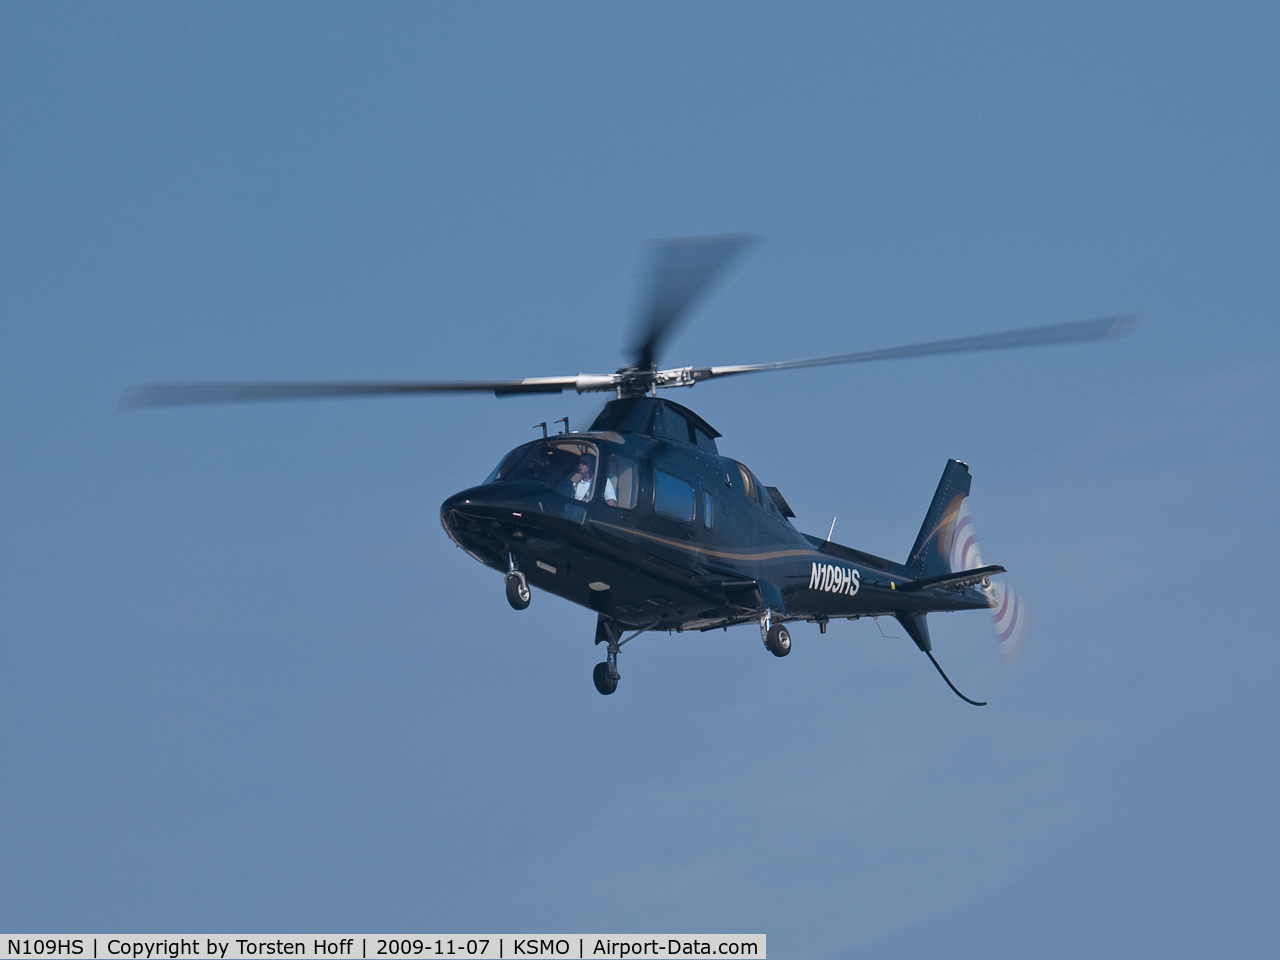 N109HS, 2002 Agusta A-109E C/N 11145, N109HS arriving on RWY 21